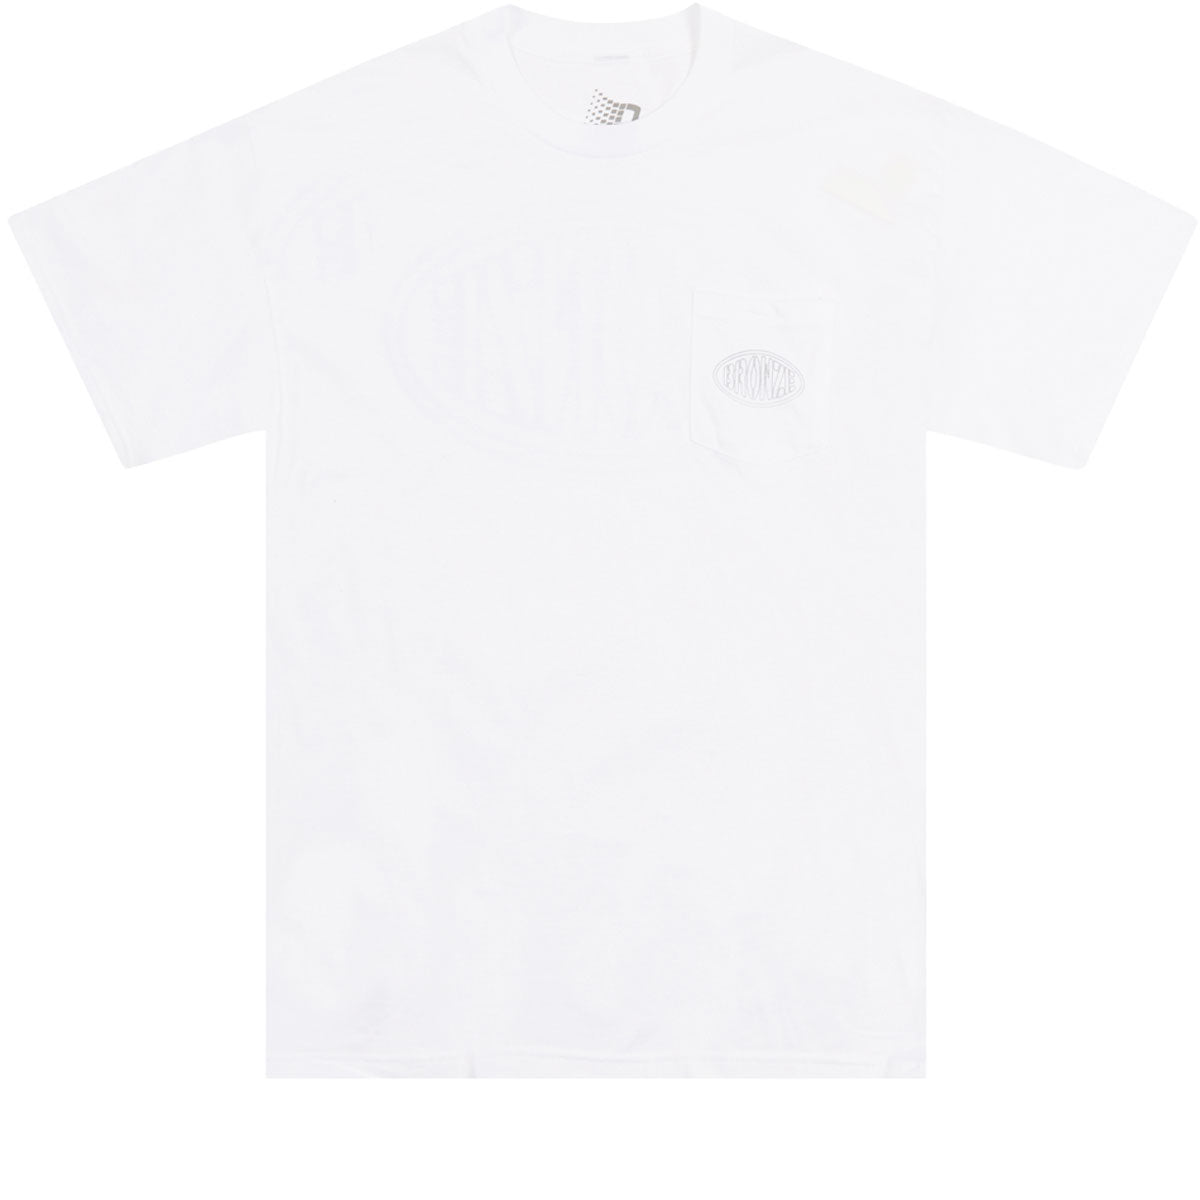 Bronze 56k Reflective Oval Pocket T-Shirt - White image 1